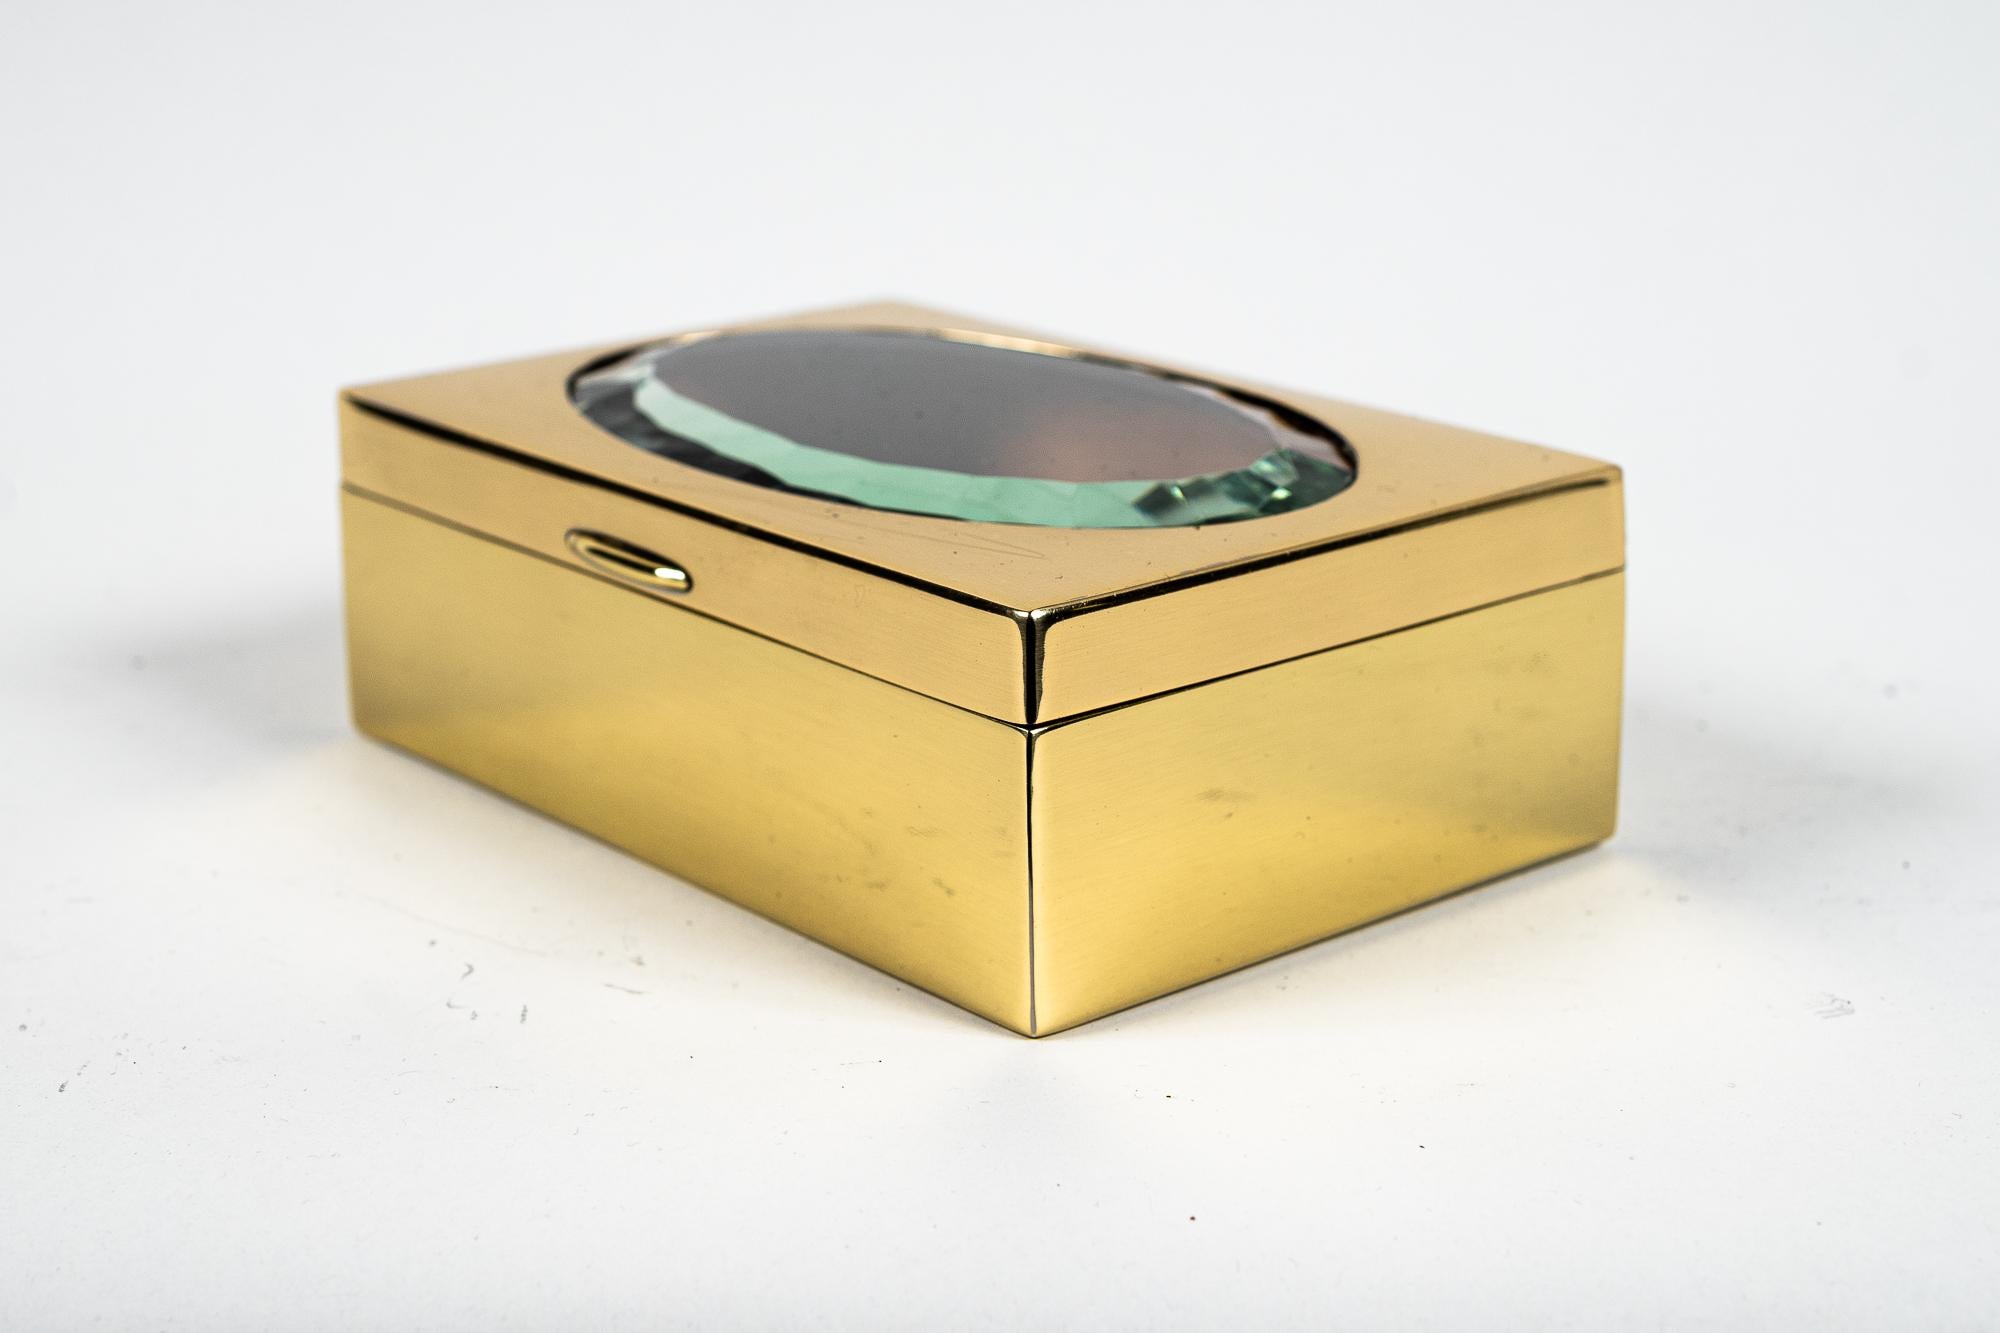 Art Deco jewelry box vienna around 1920s
Original cut glass 
Polished and stove enameled.
 